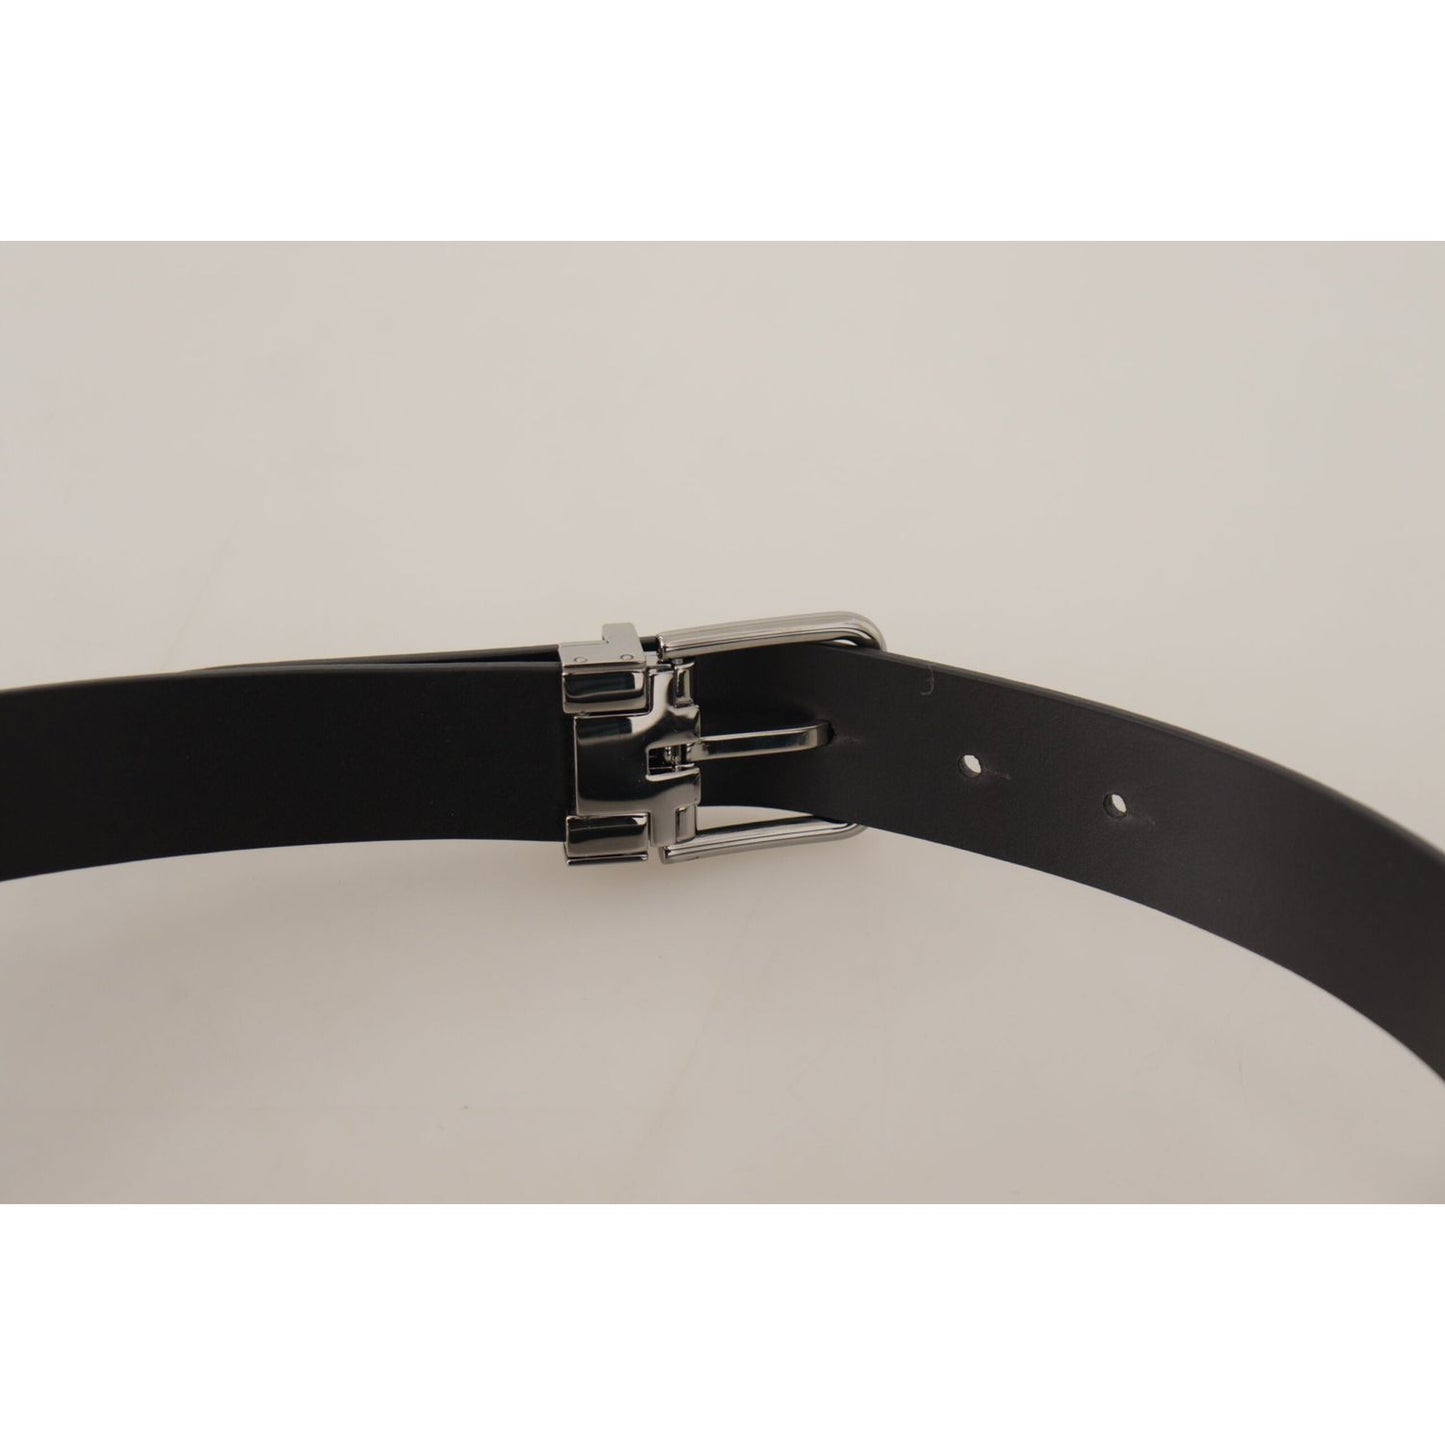 Dolce & Gabbana Elegant Black Leather Belt with Metal Buckle black-calf-leather-silver-tone-metal-buckle-belt-5